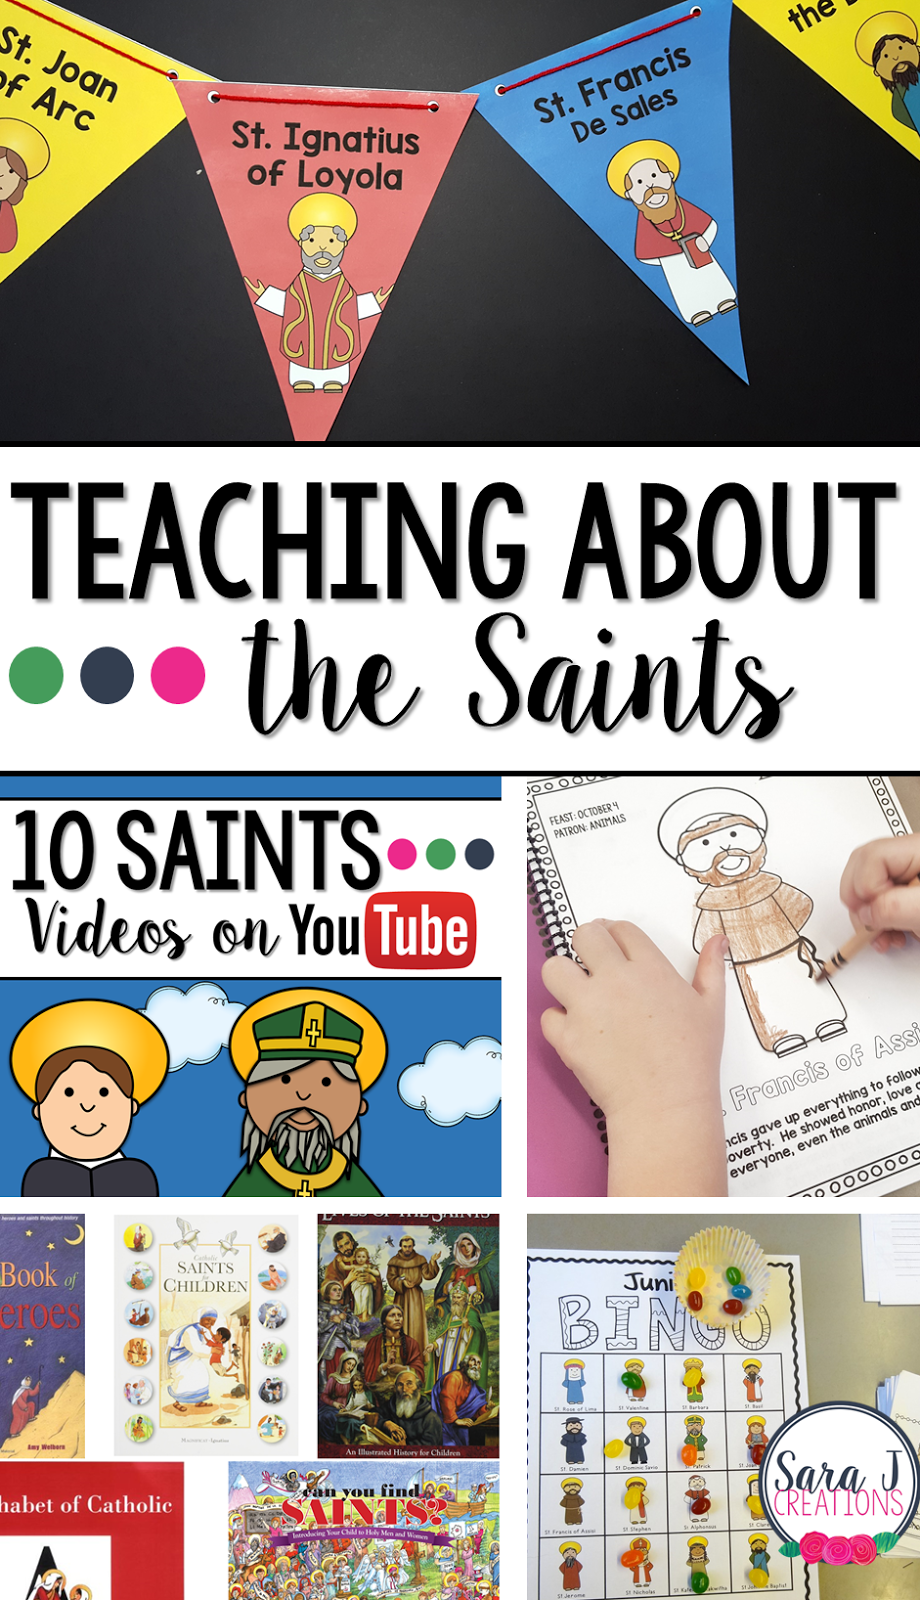 Teaching About the Saints Sara J Creations